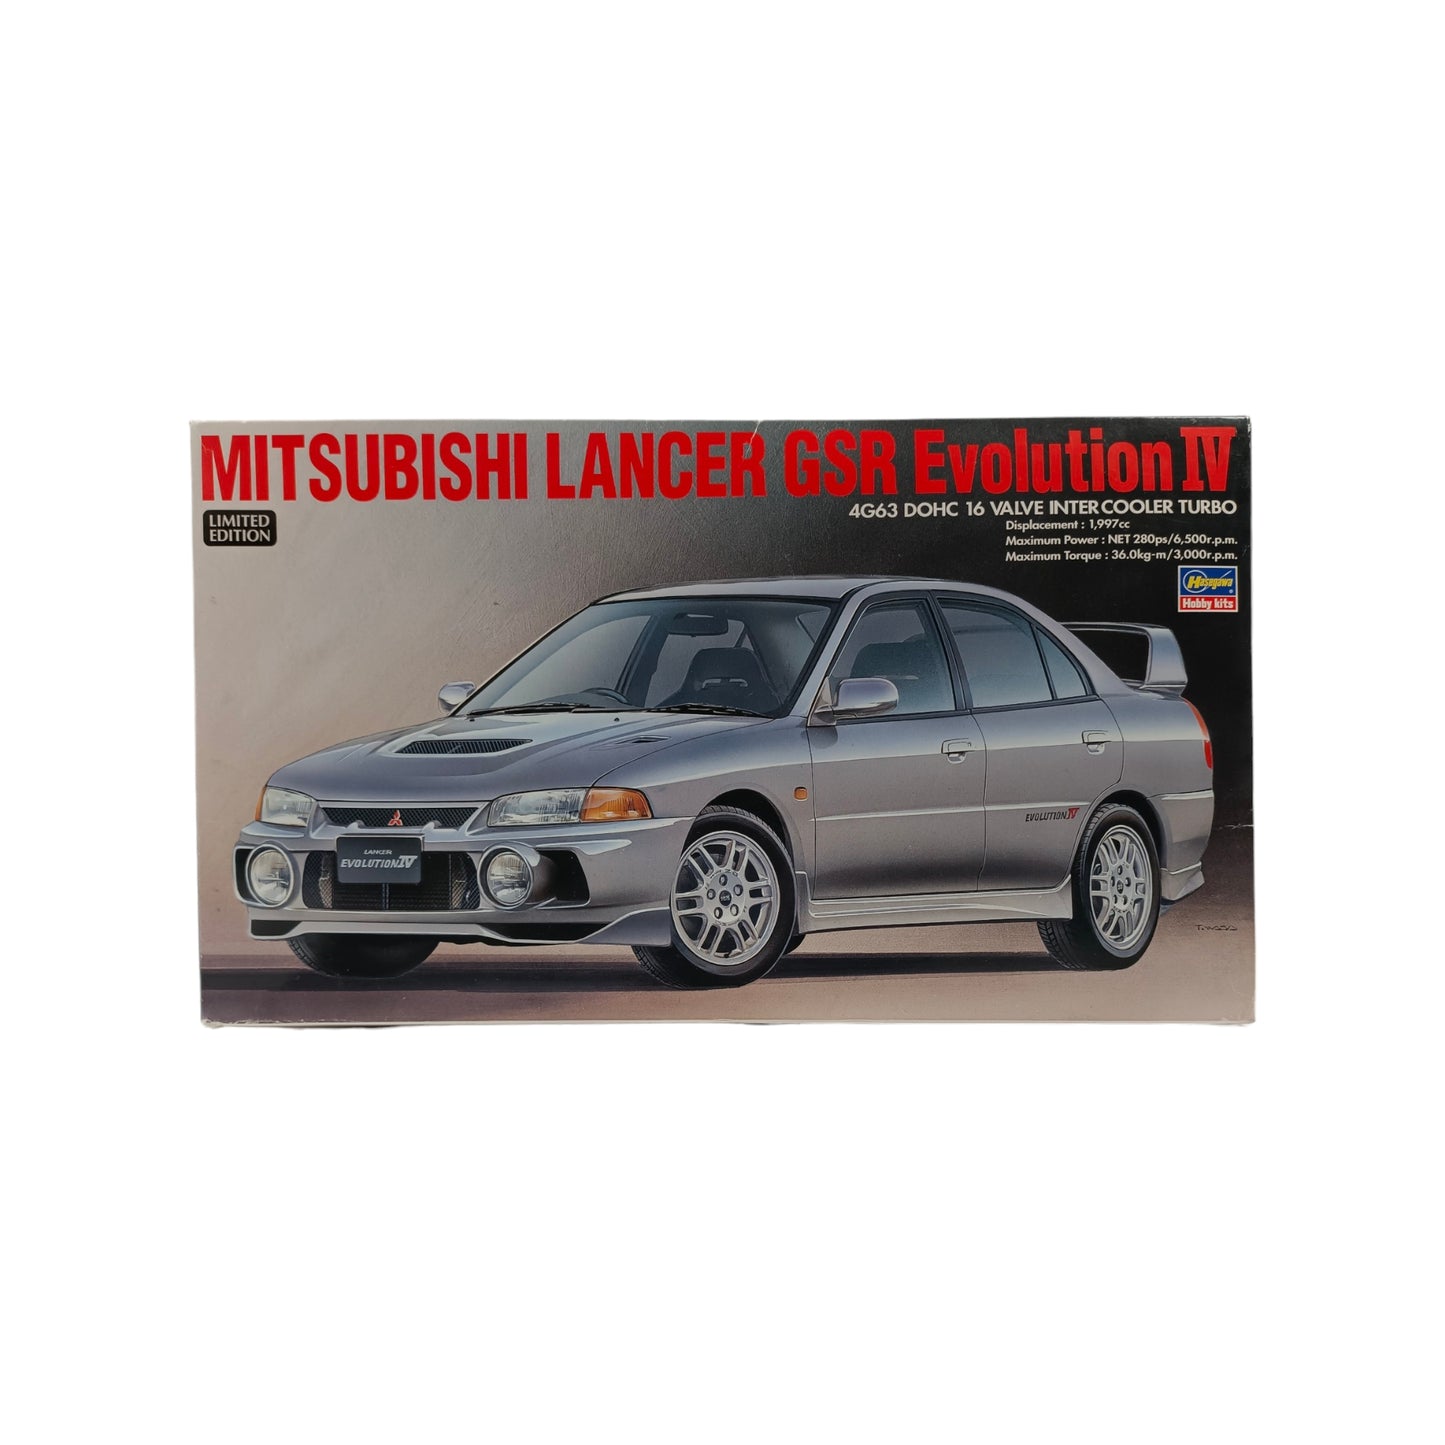 Mitsubishi Lancer GSR Evolution IV 1/24 - Hasegawa